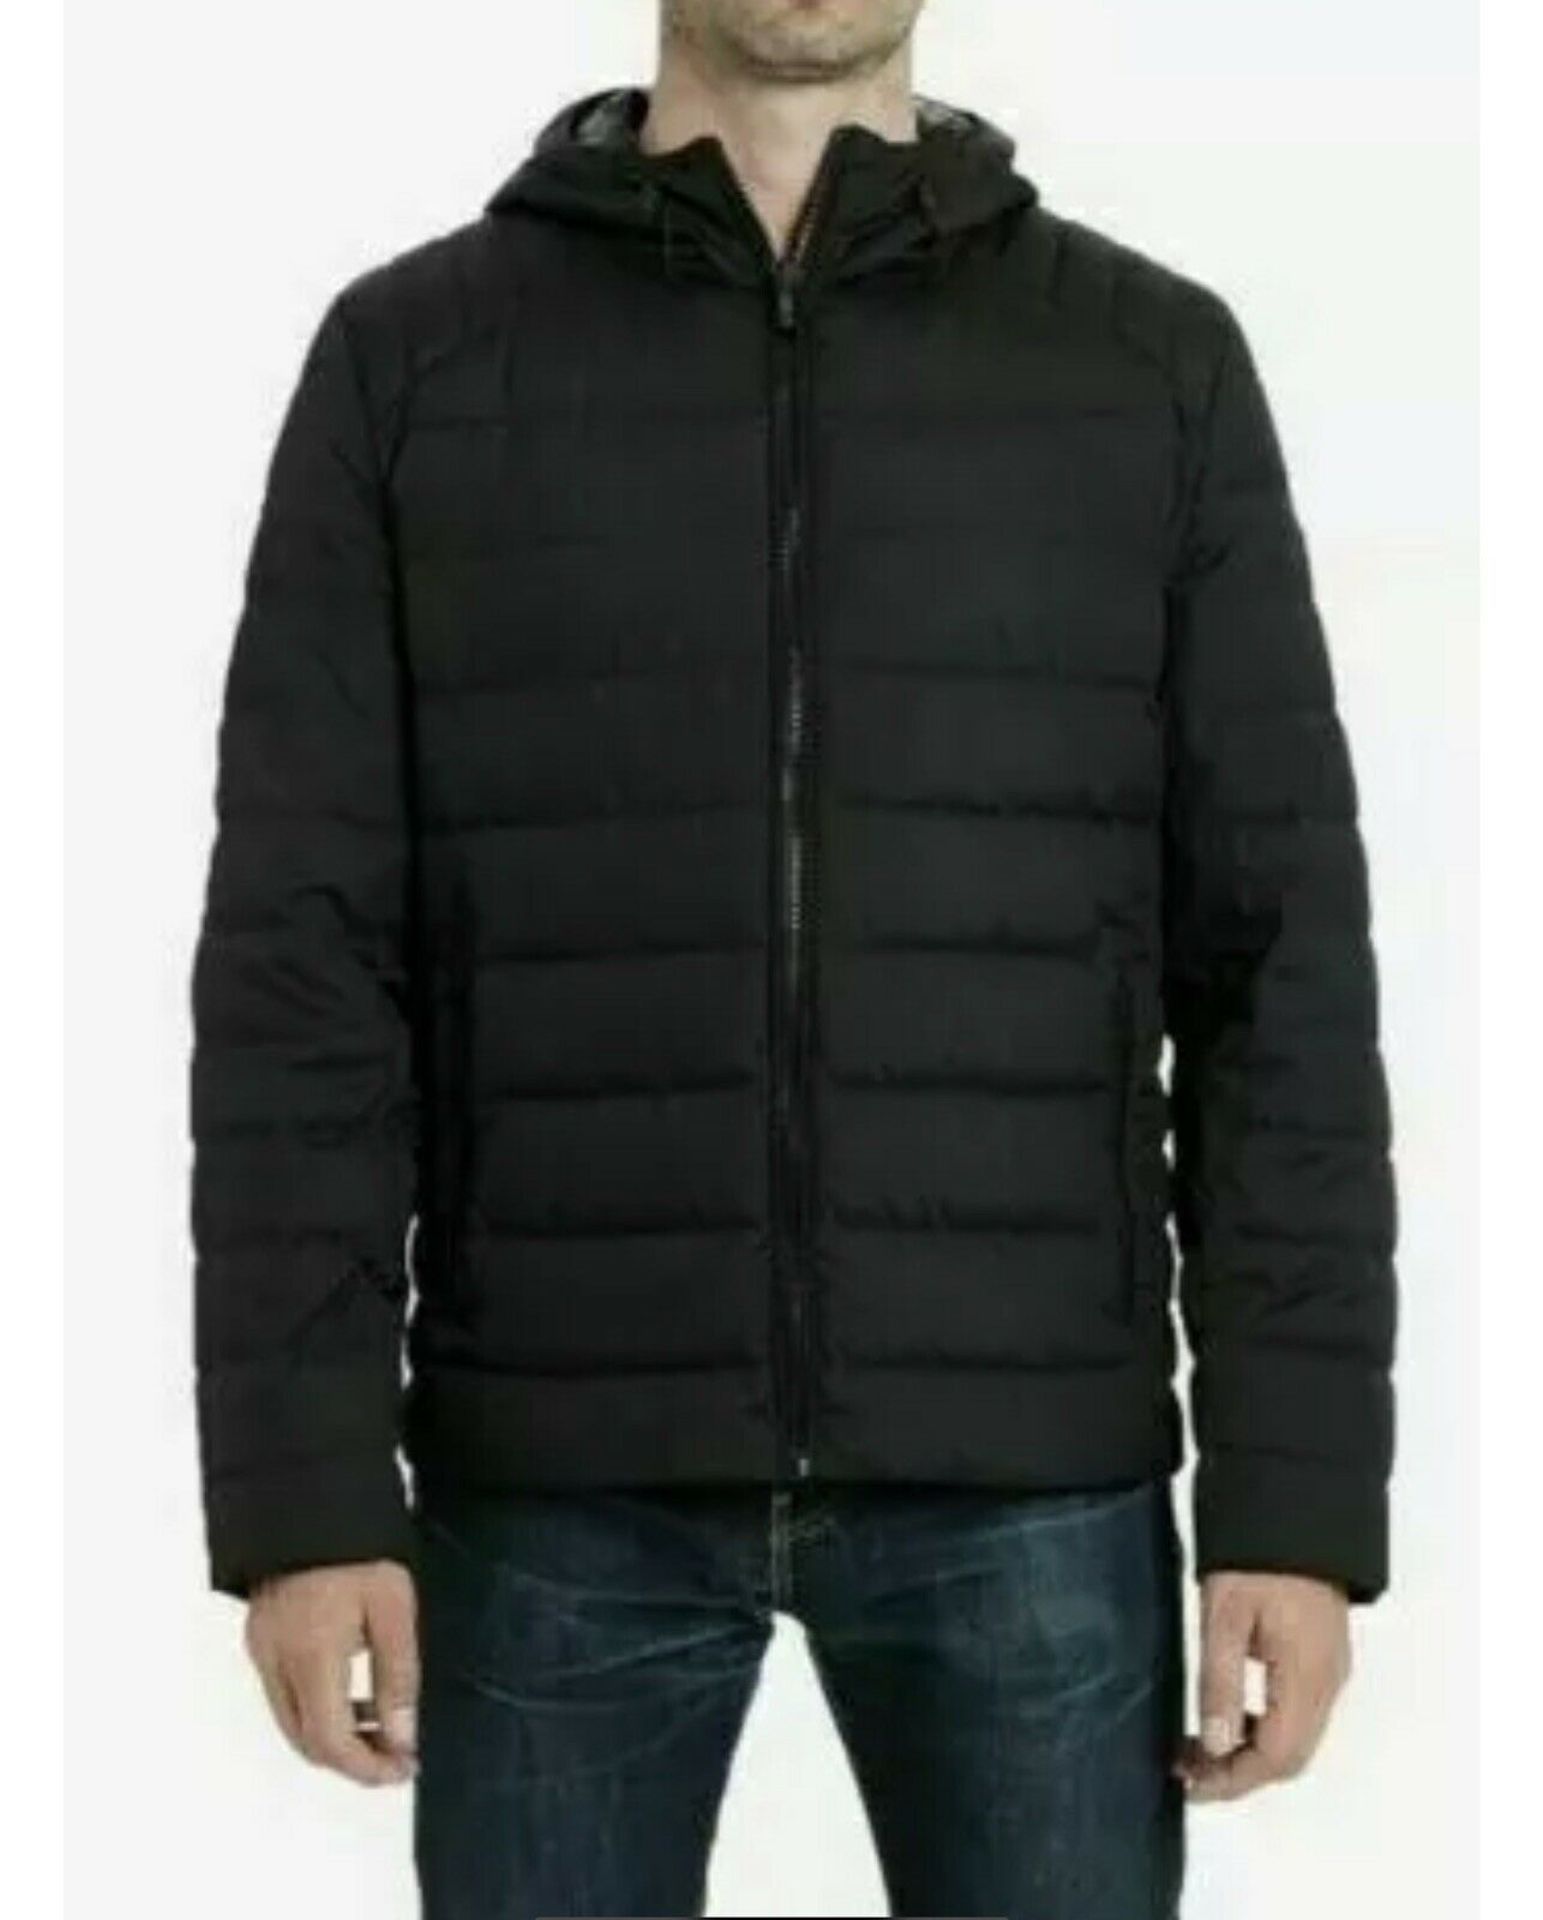 Michael Kors Premium Down Men's Puffer Jacket Black Size M - RRP £199.00